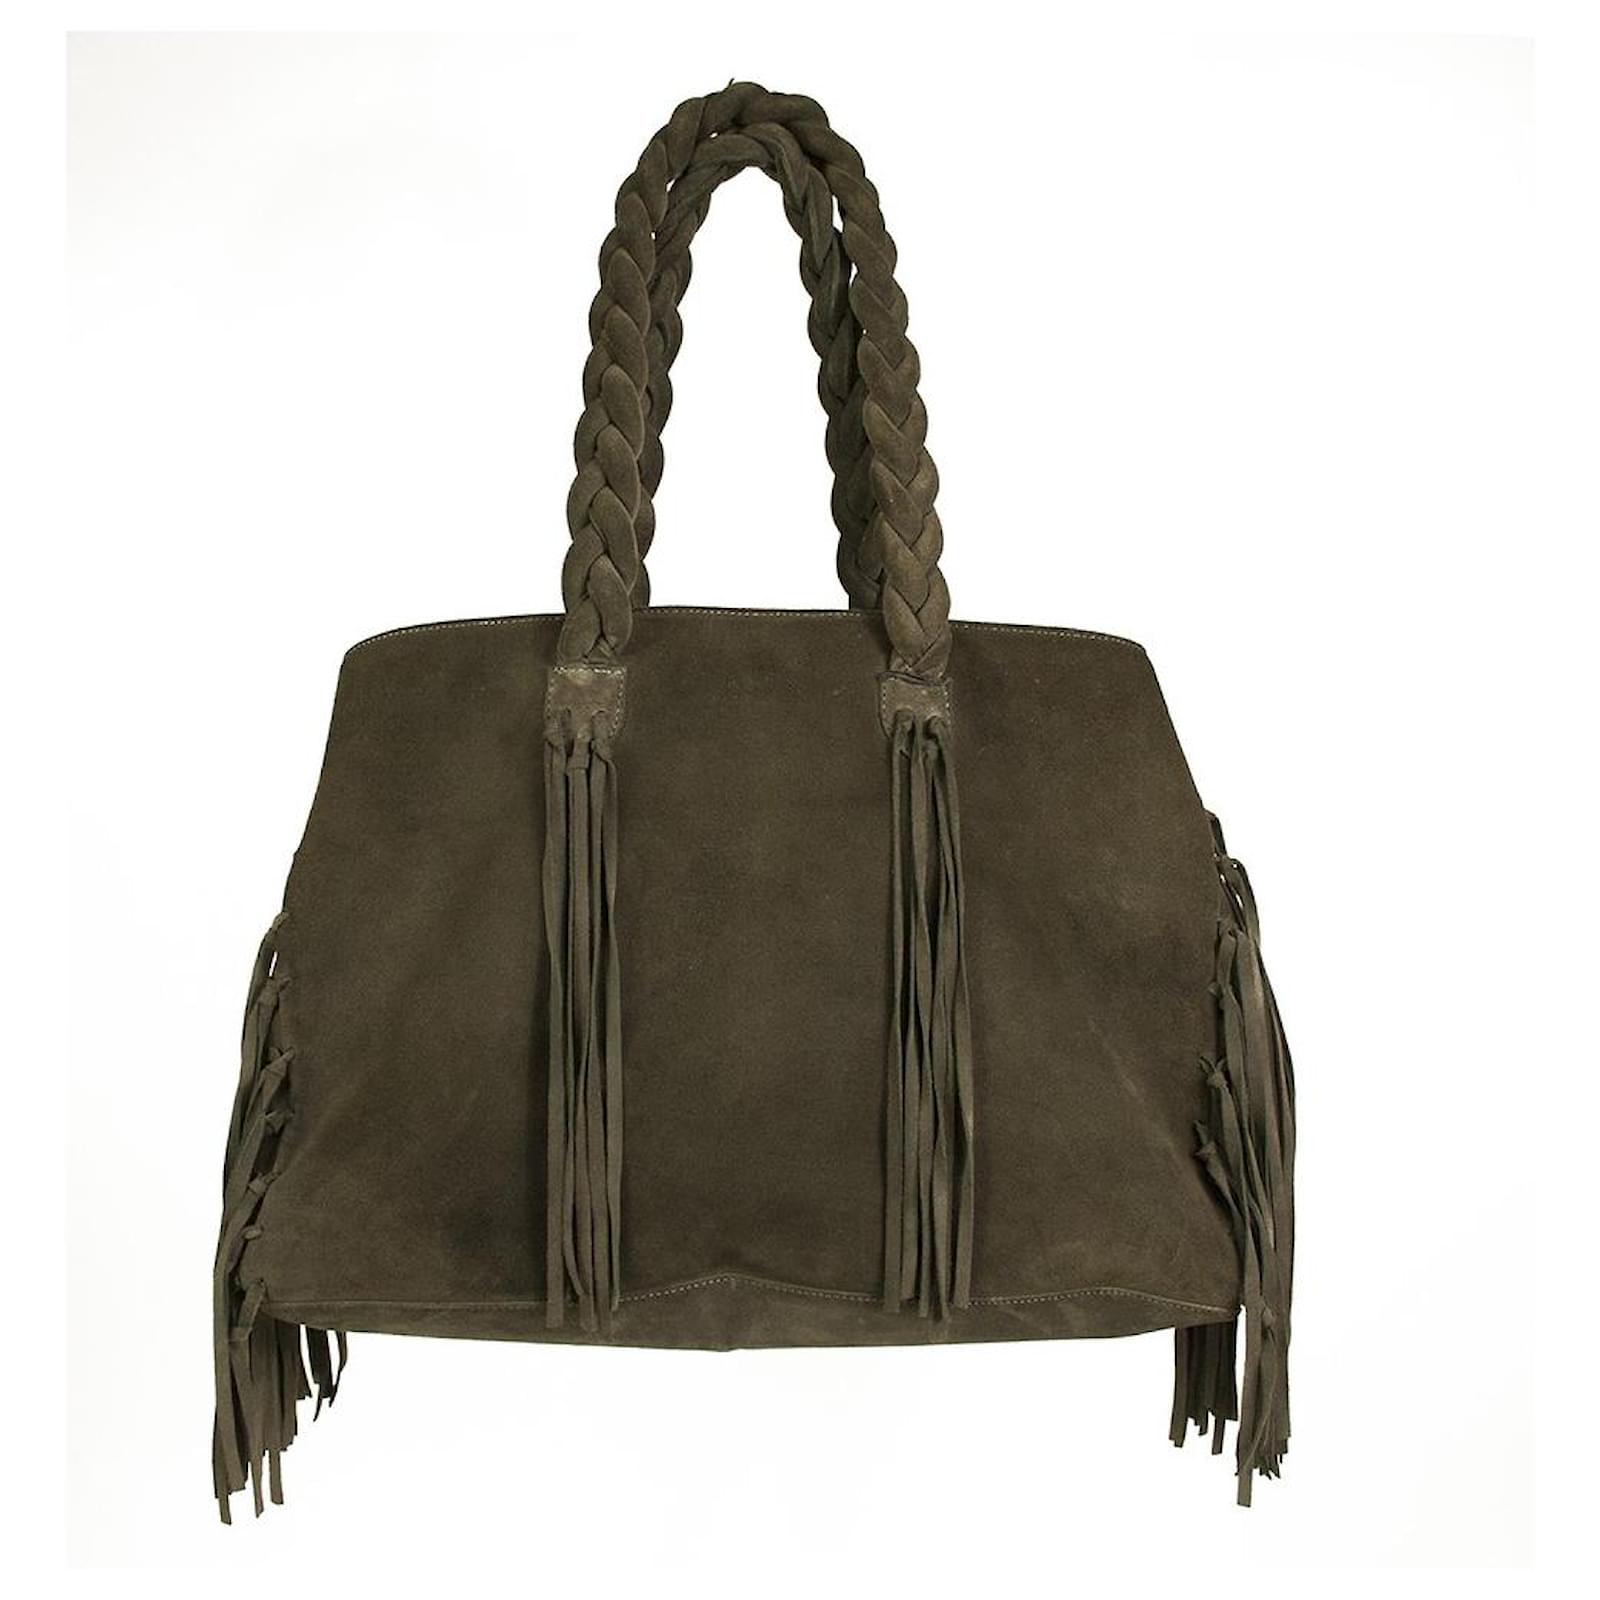 Boho Fringe Leather Purse, Suede Leather Bag with Fringe, Hippie Bag